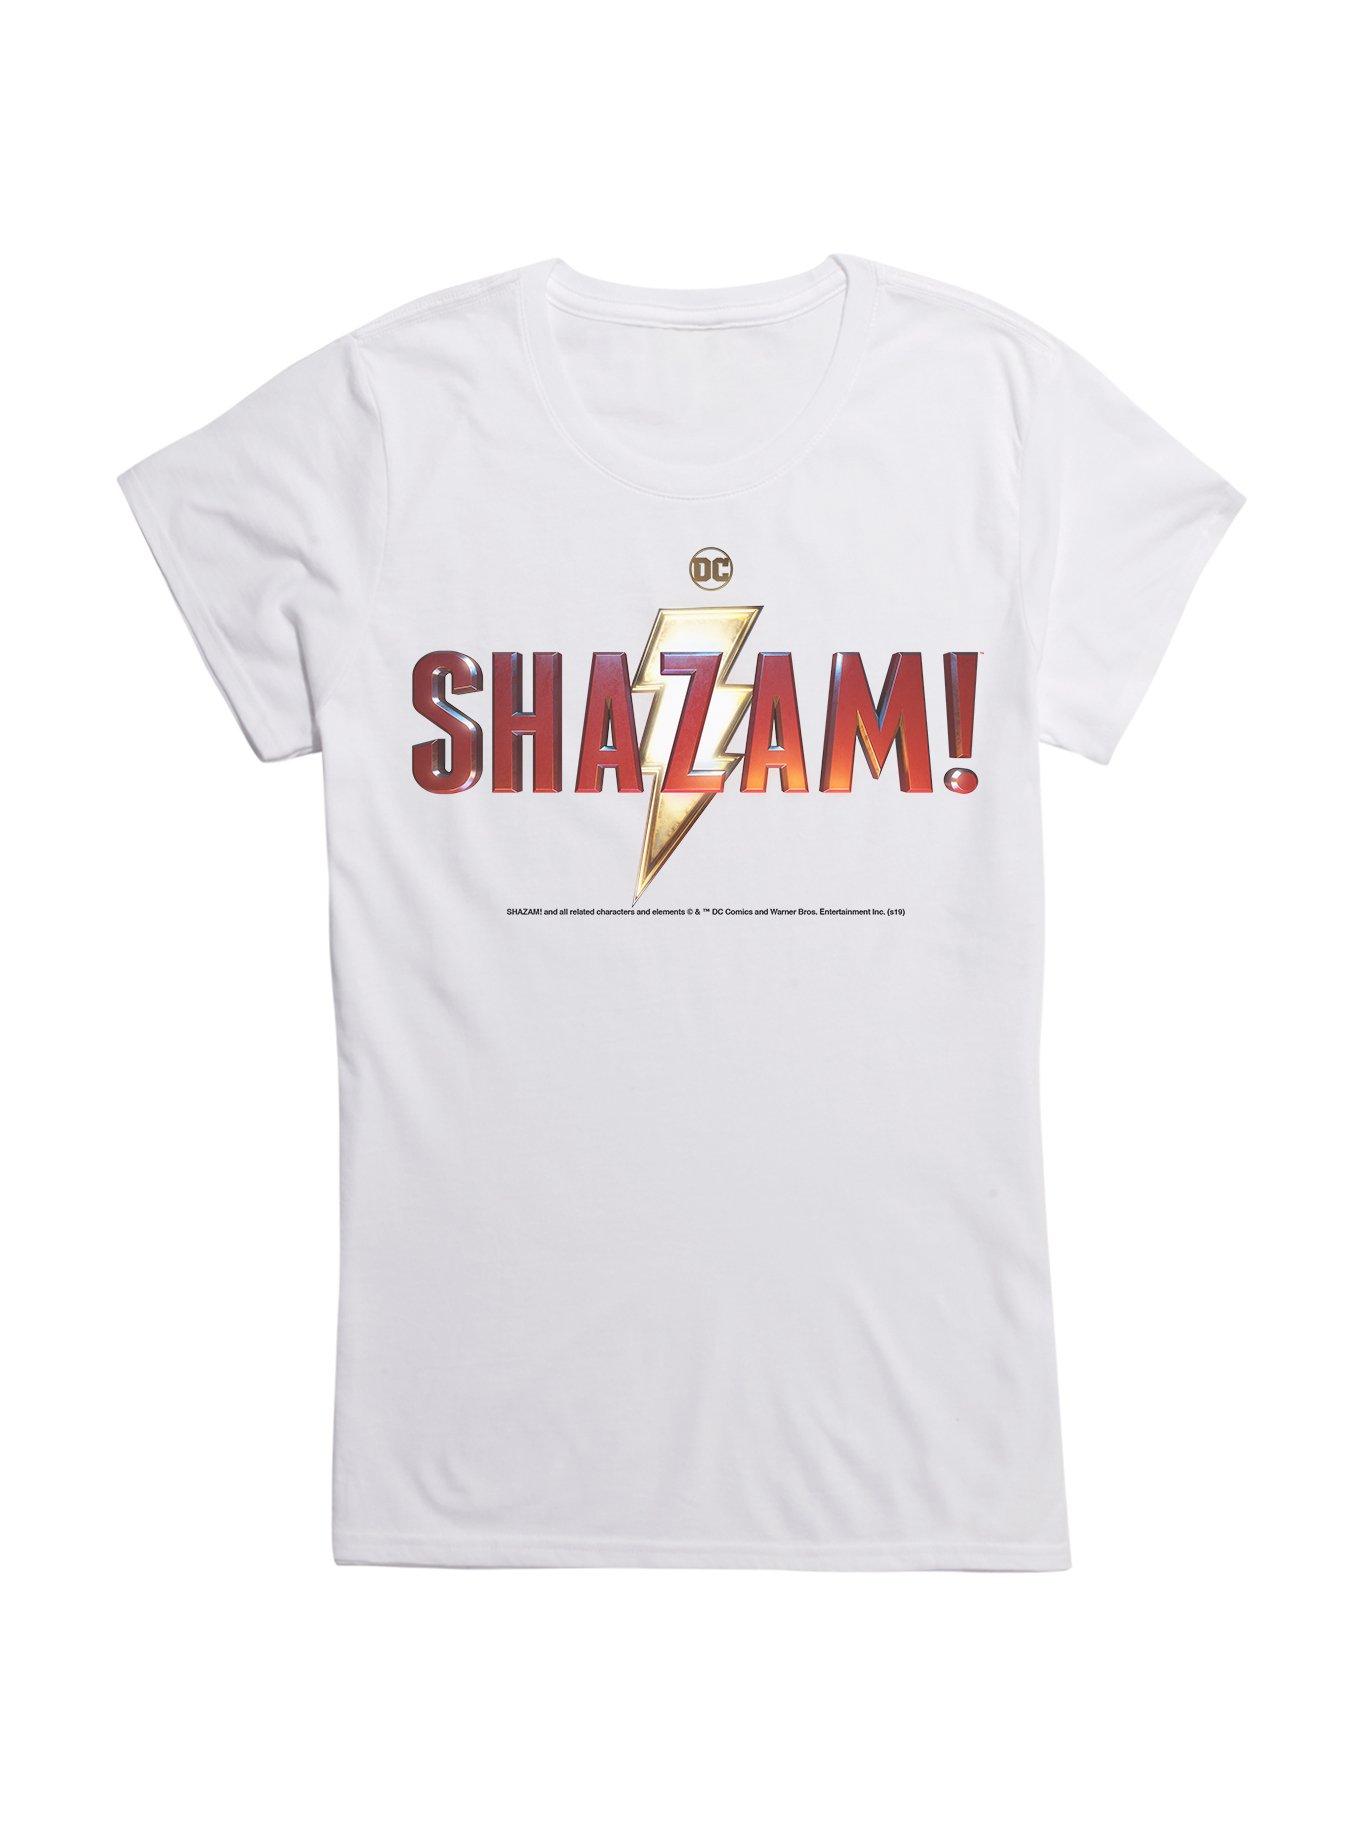 Houston Rockets DC comic Shazam character shirt - Limotees